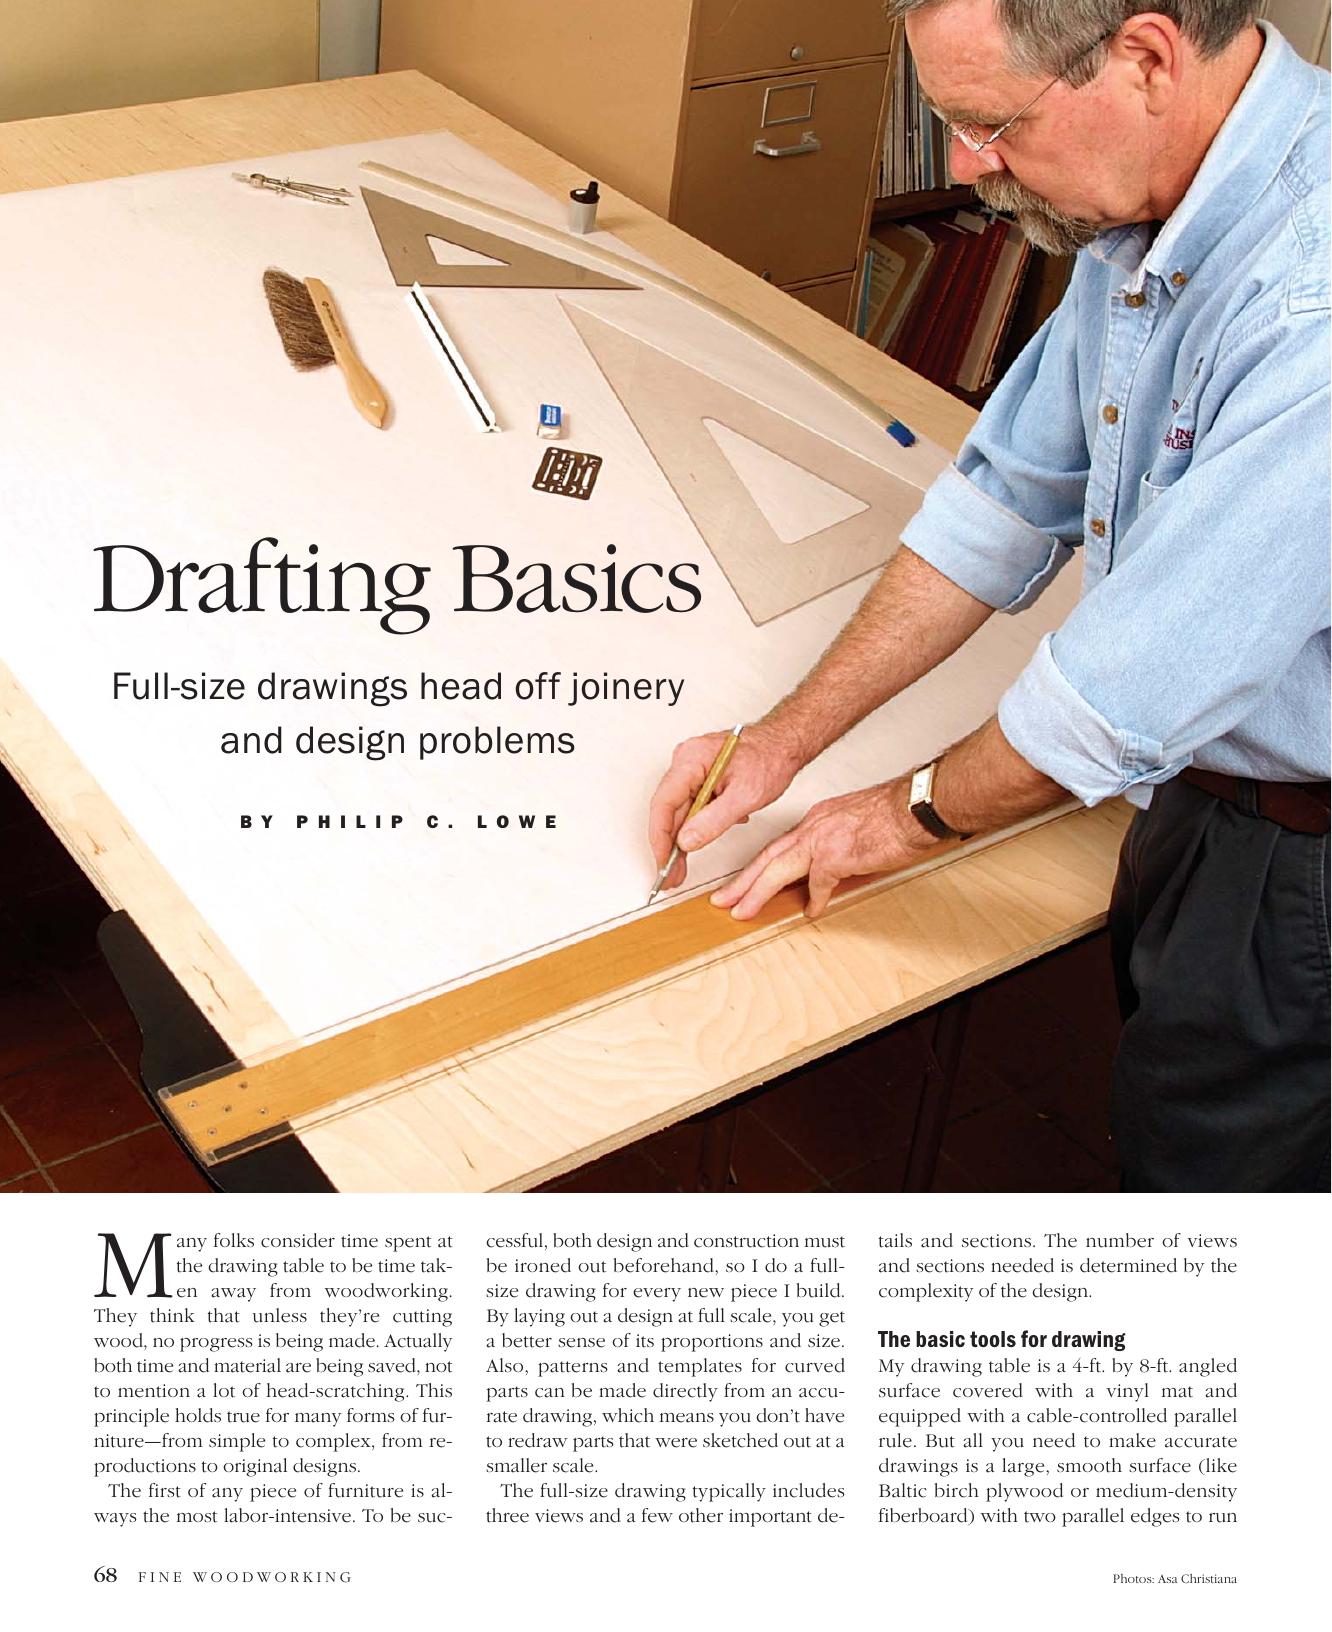 Drafting Basics by Philip C. Lowe